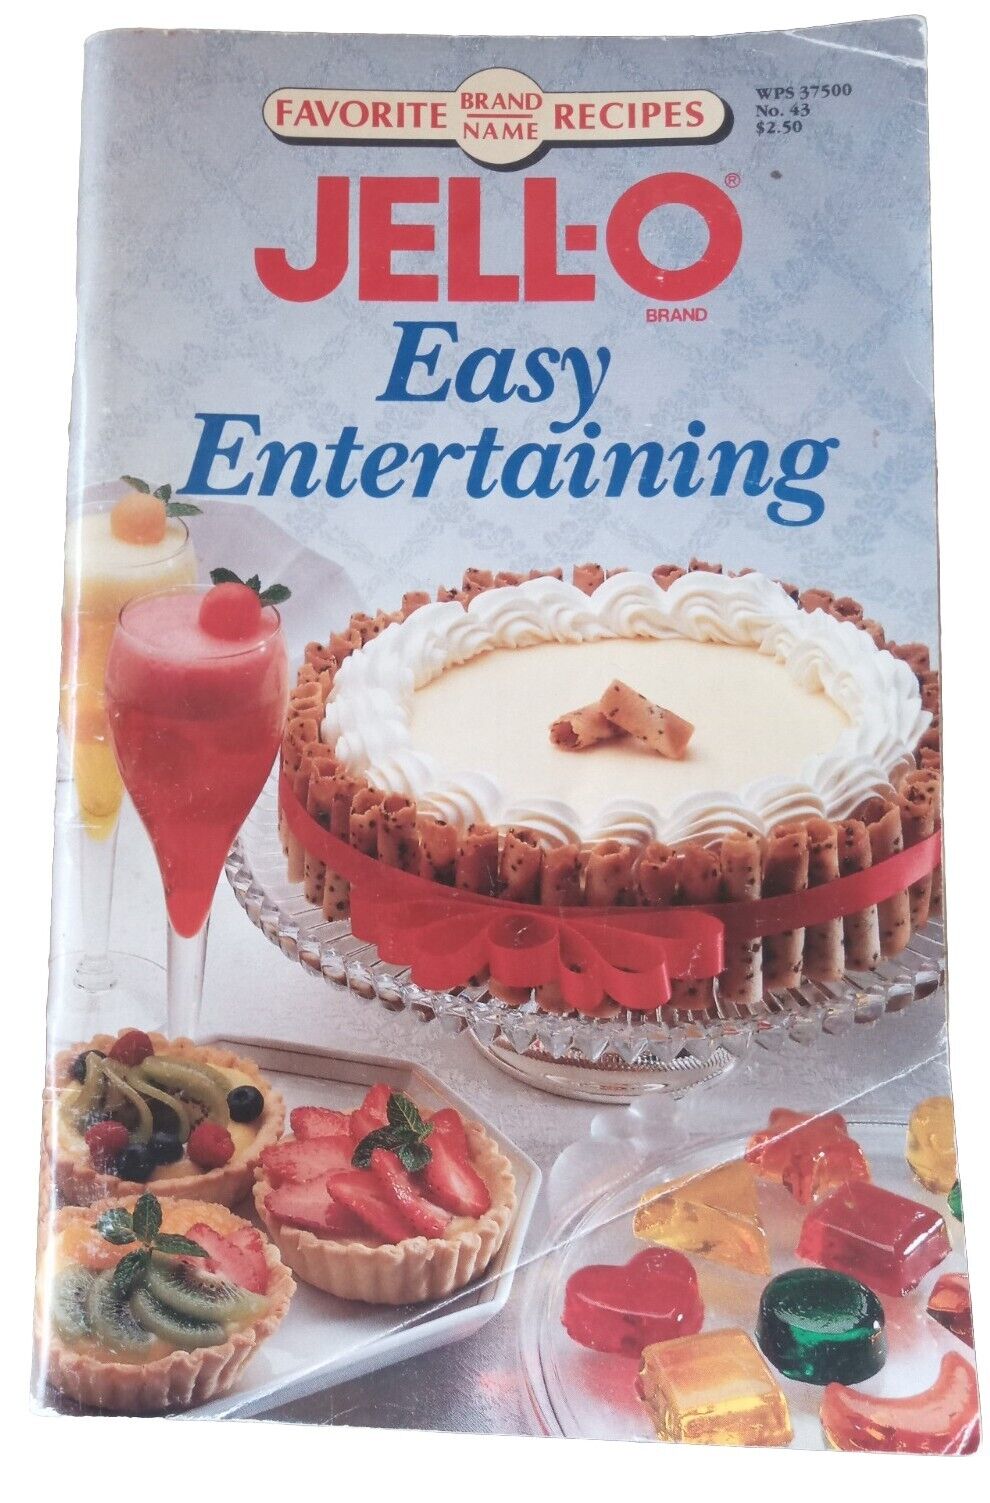 1992 Jell-O Easy Entertaining Favorite Brand Name Recipes Cookbook 